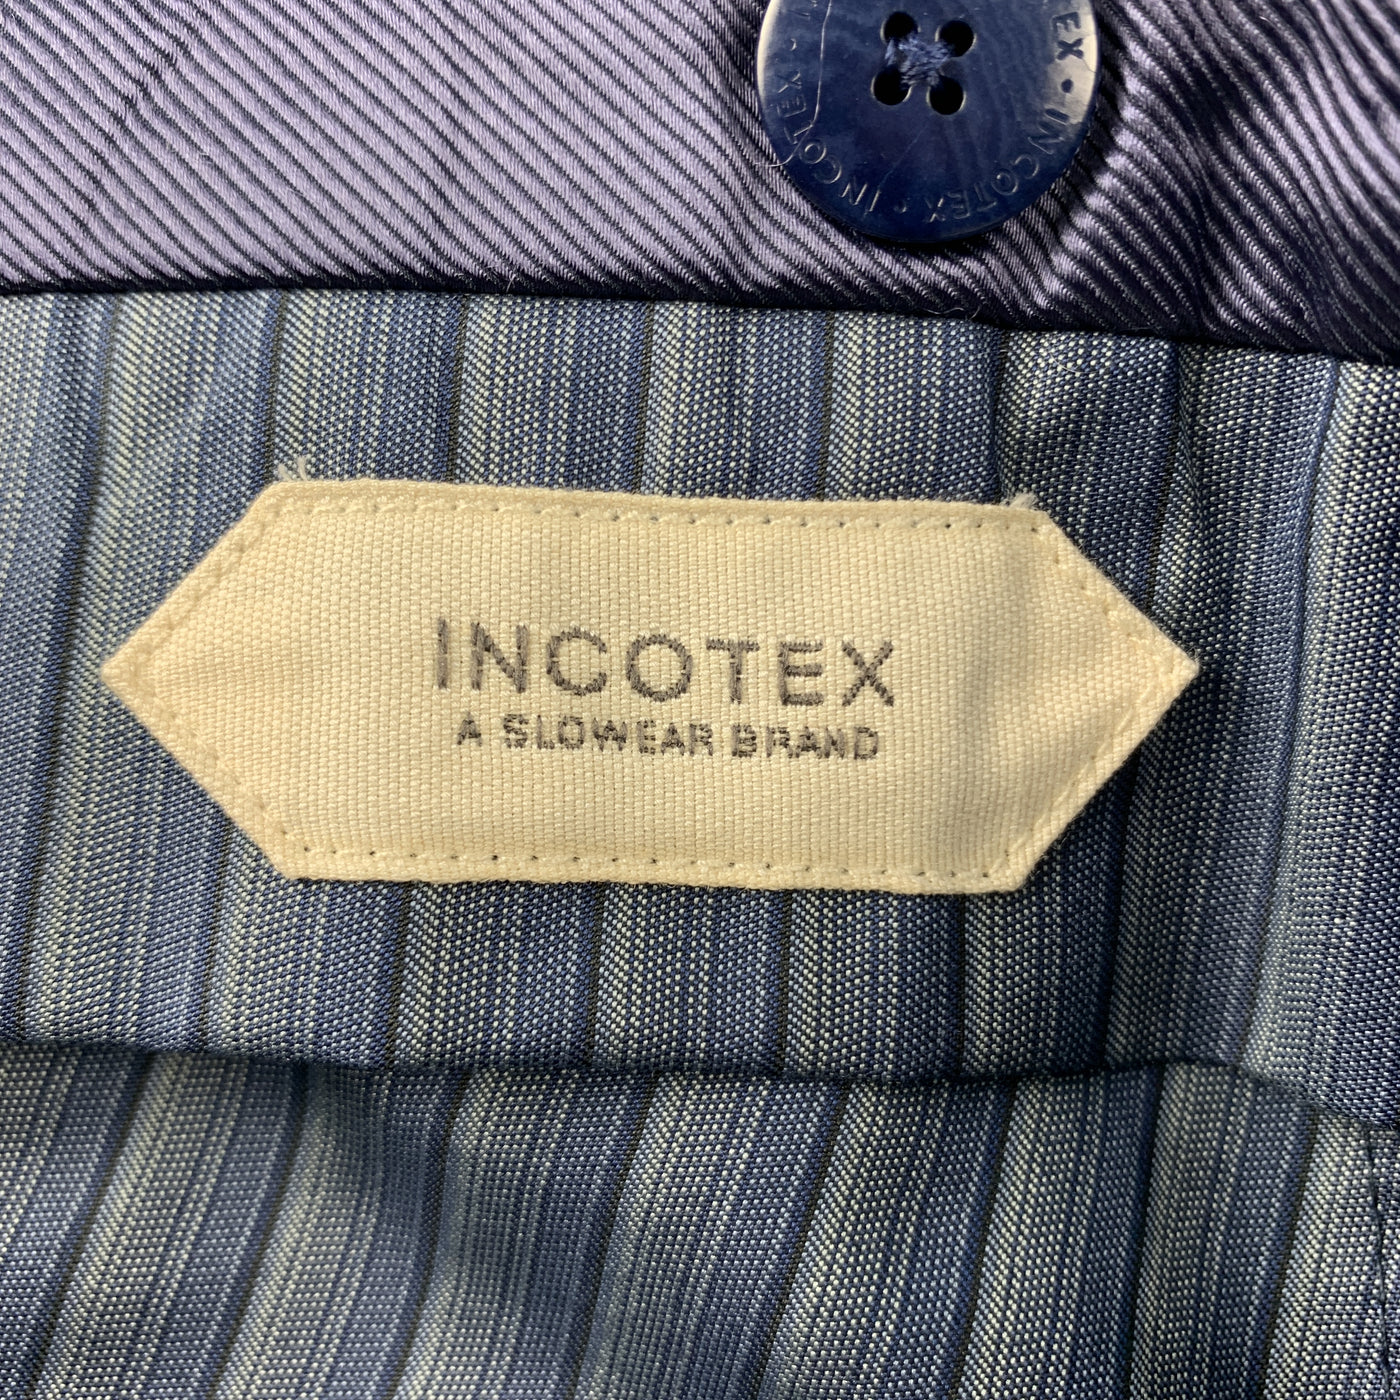 INCOTEX Size 32 x 28 Gray Solid Wool Flat Front Dress Pants